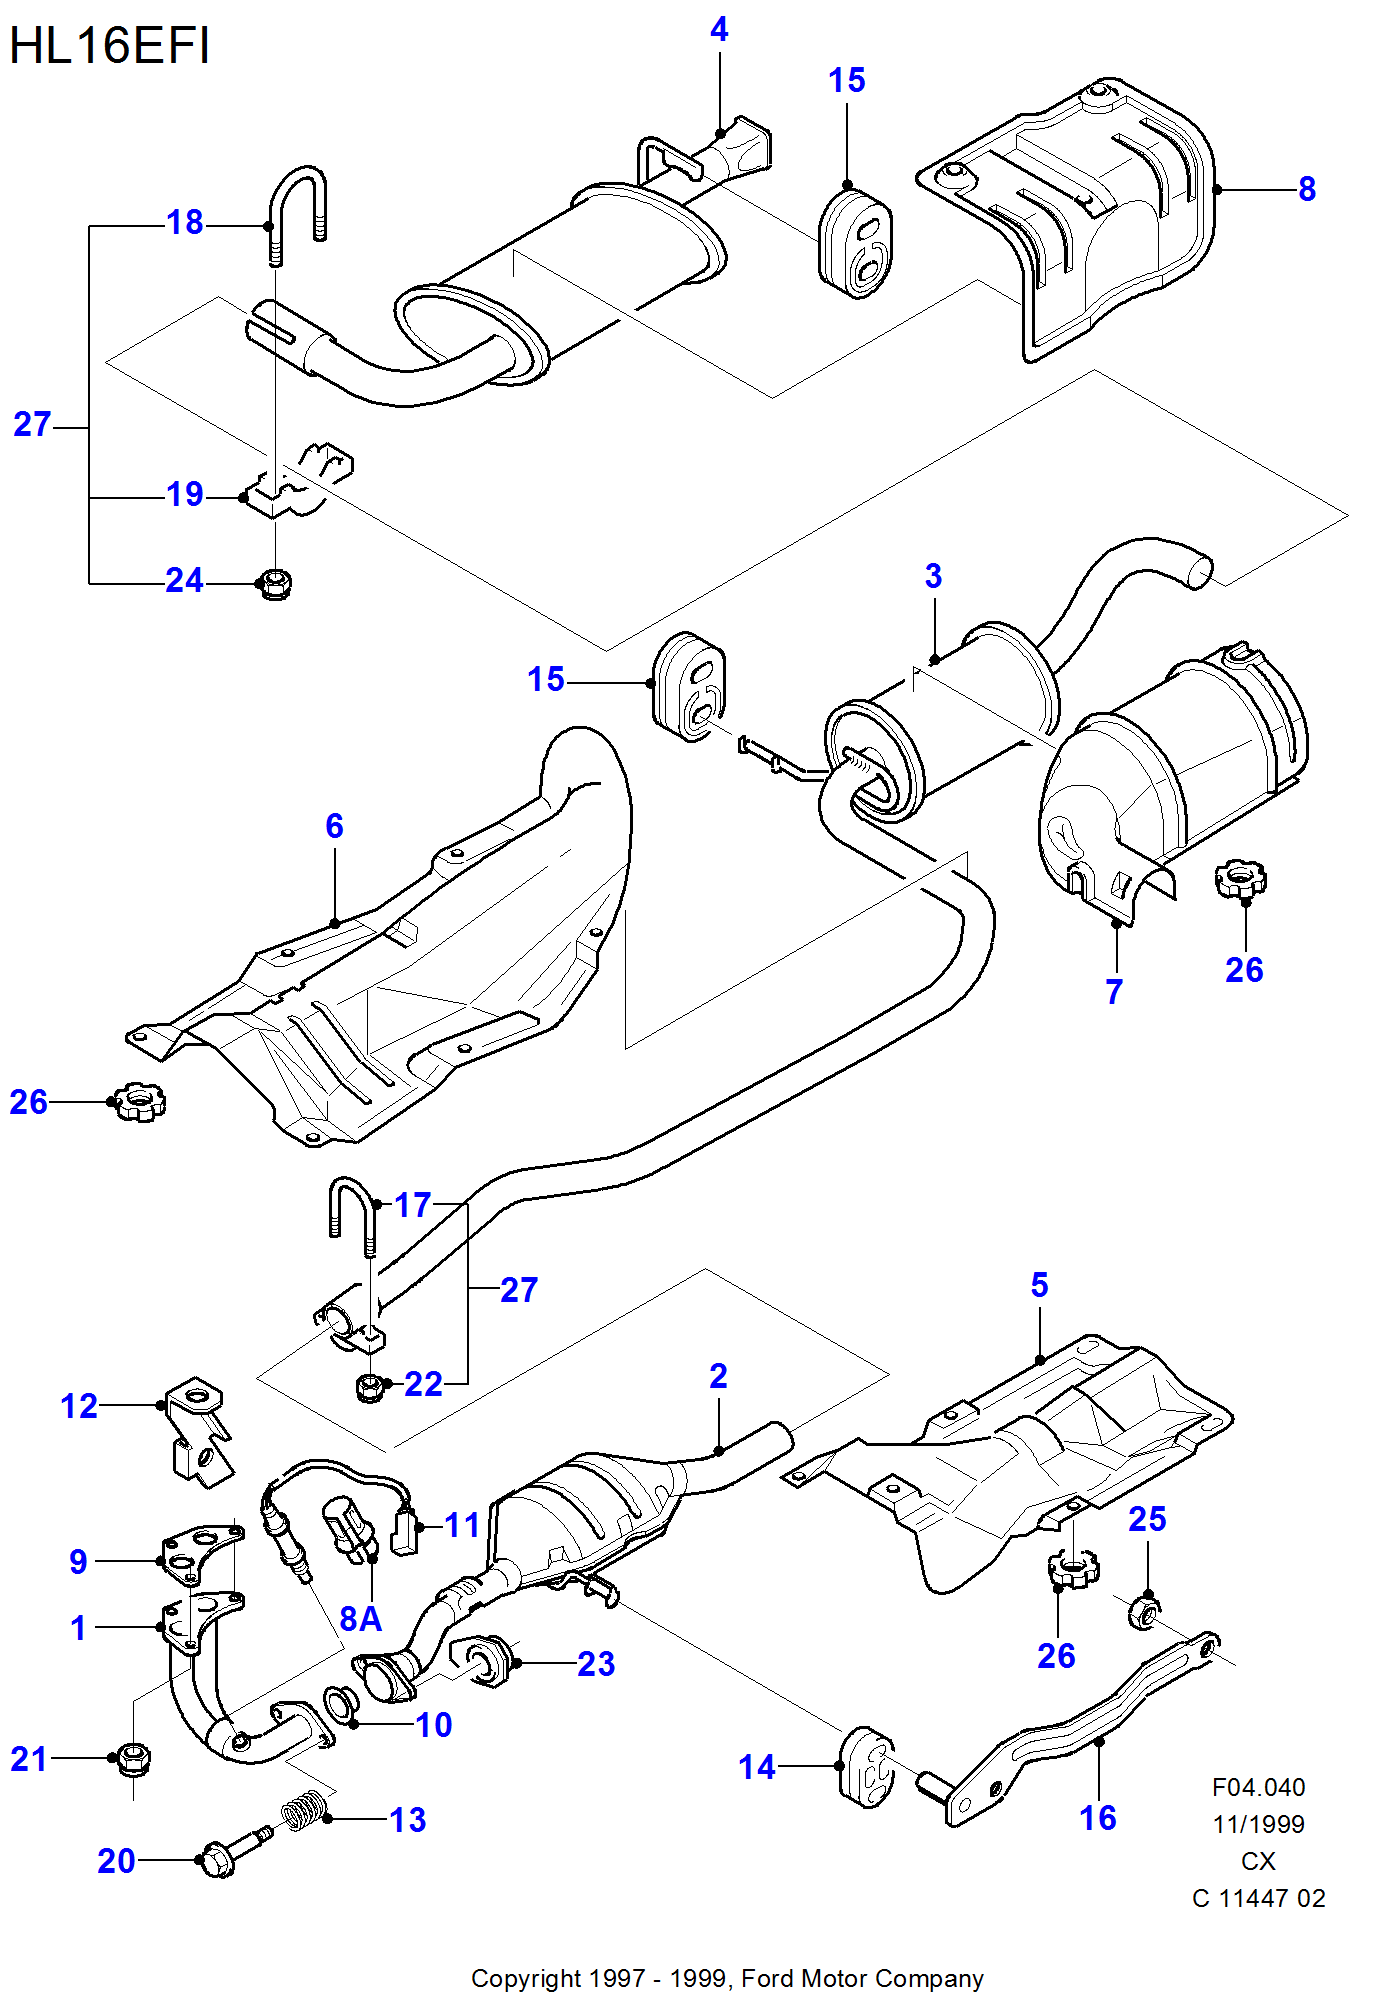 Exhaust System With Catalyst voor Ford Fiesta Fiesta 1989-1996               (CX)